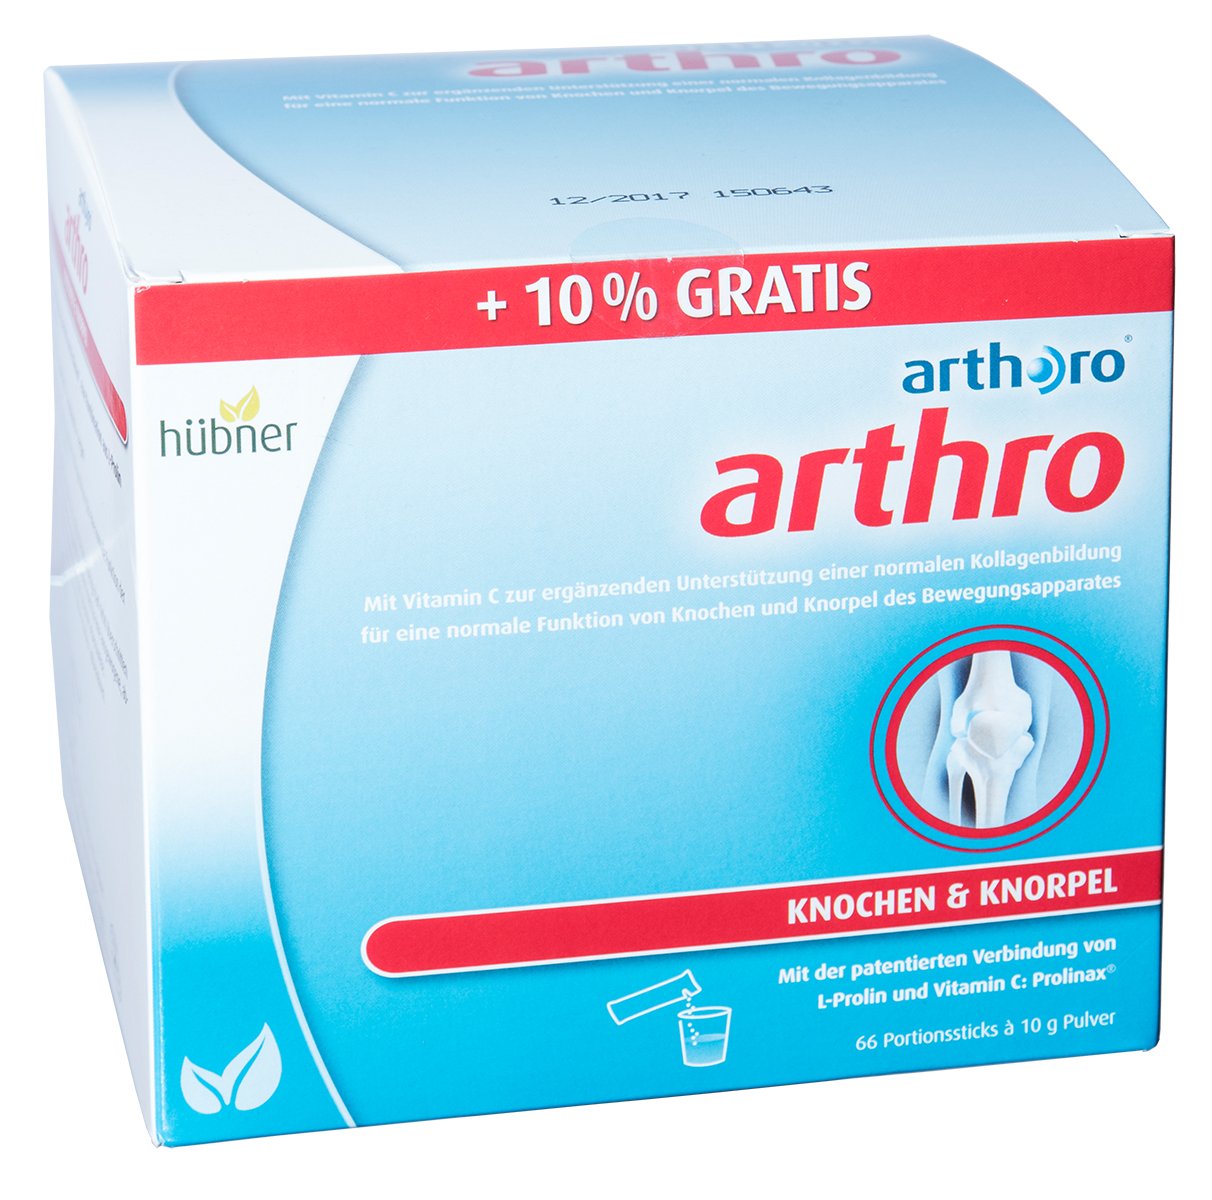 Arthoro arthro 66 Stk. (Sondergröße)